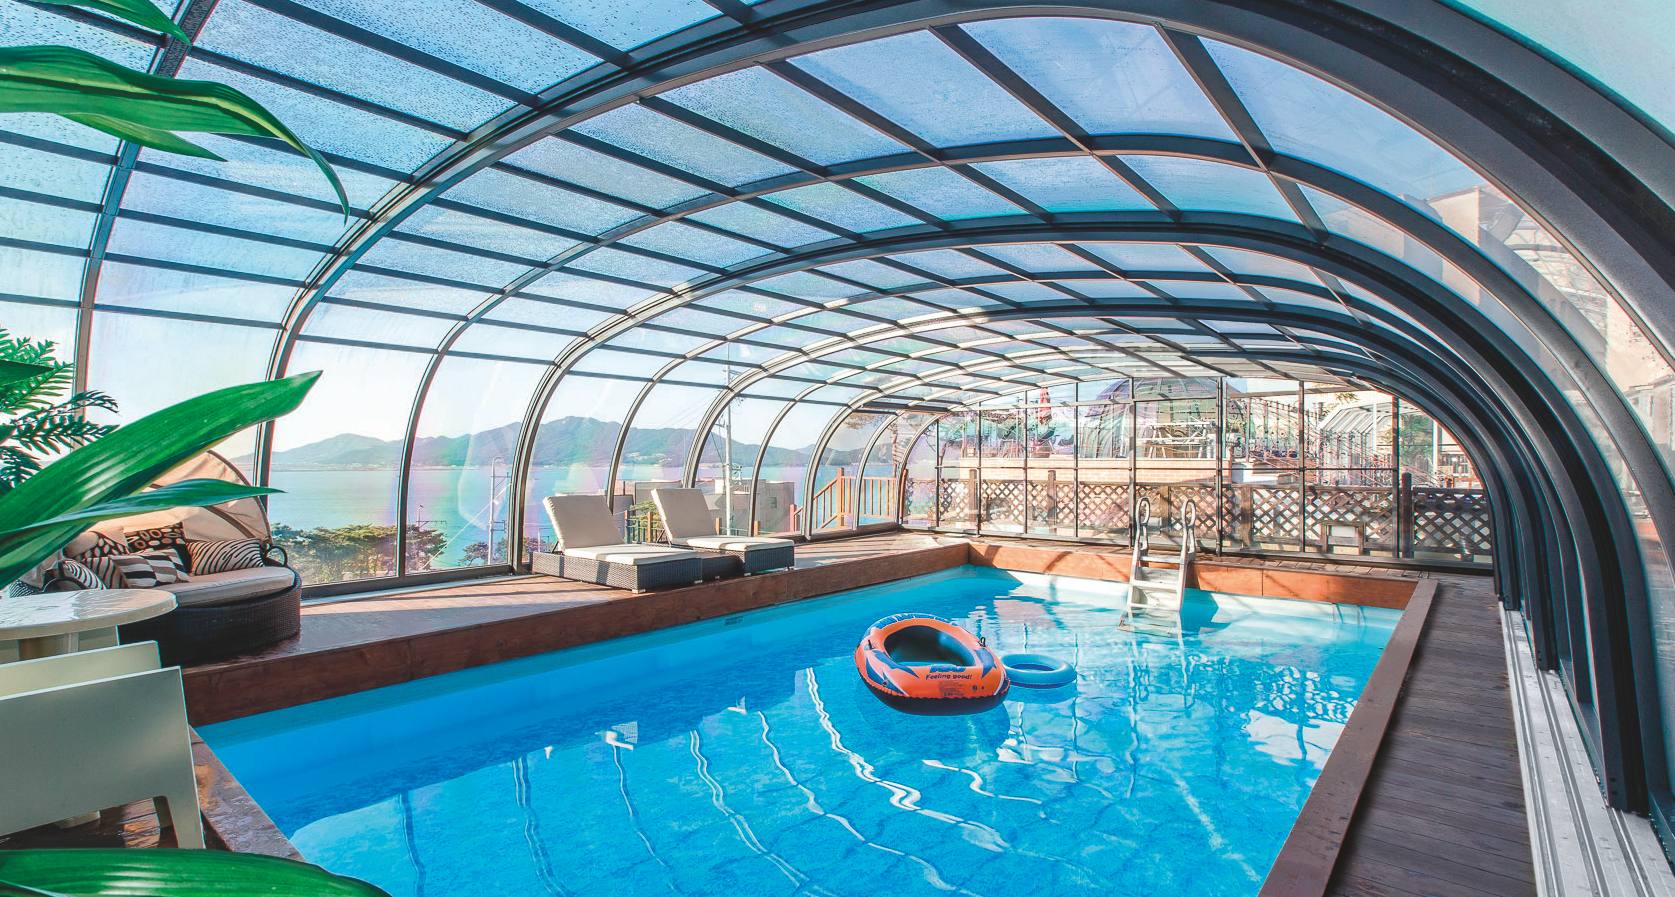 Véranda moderne avec piscine et vue panoramique.